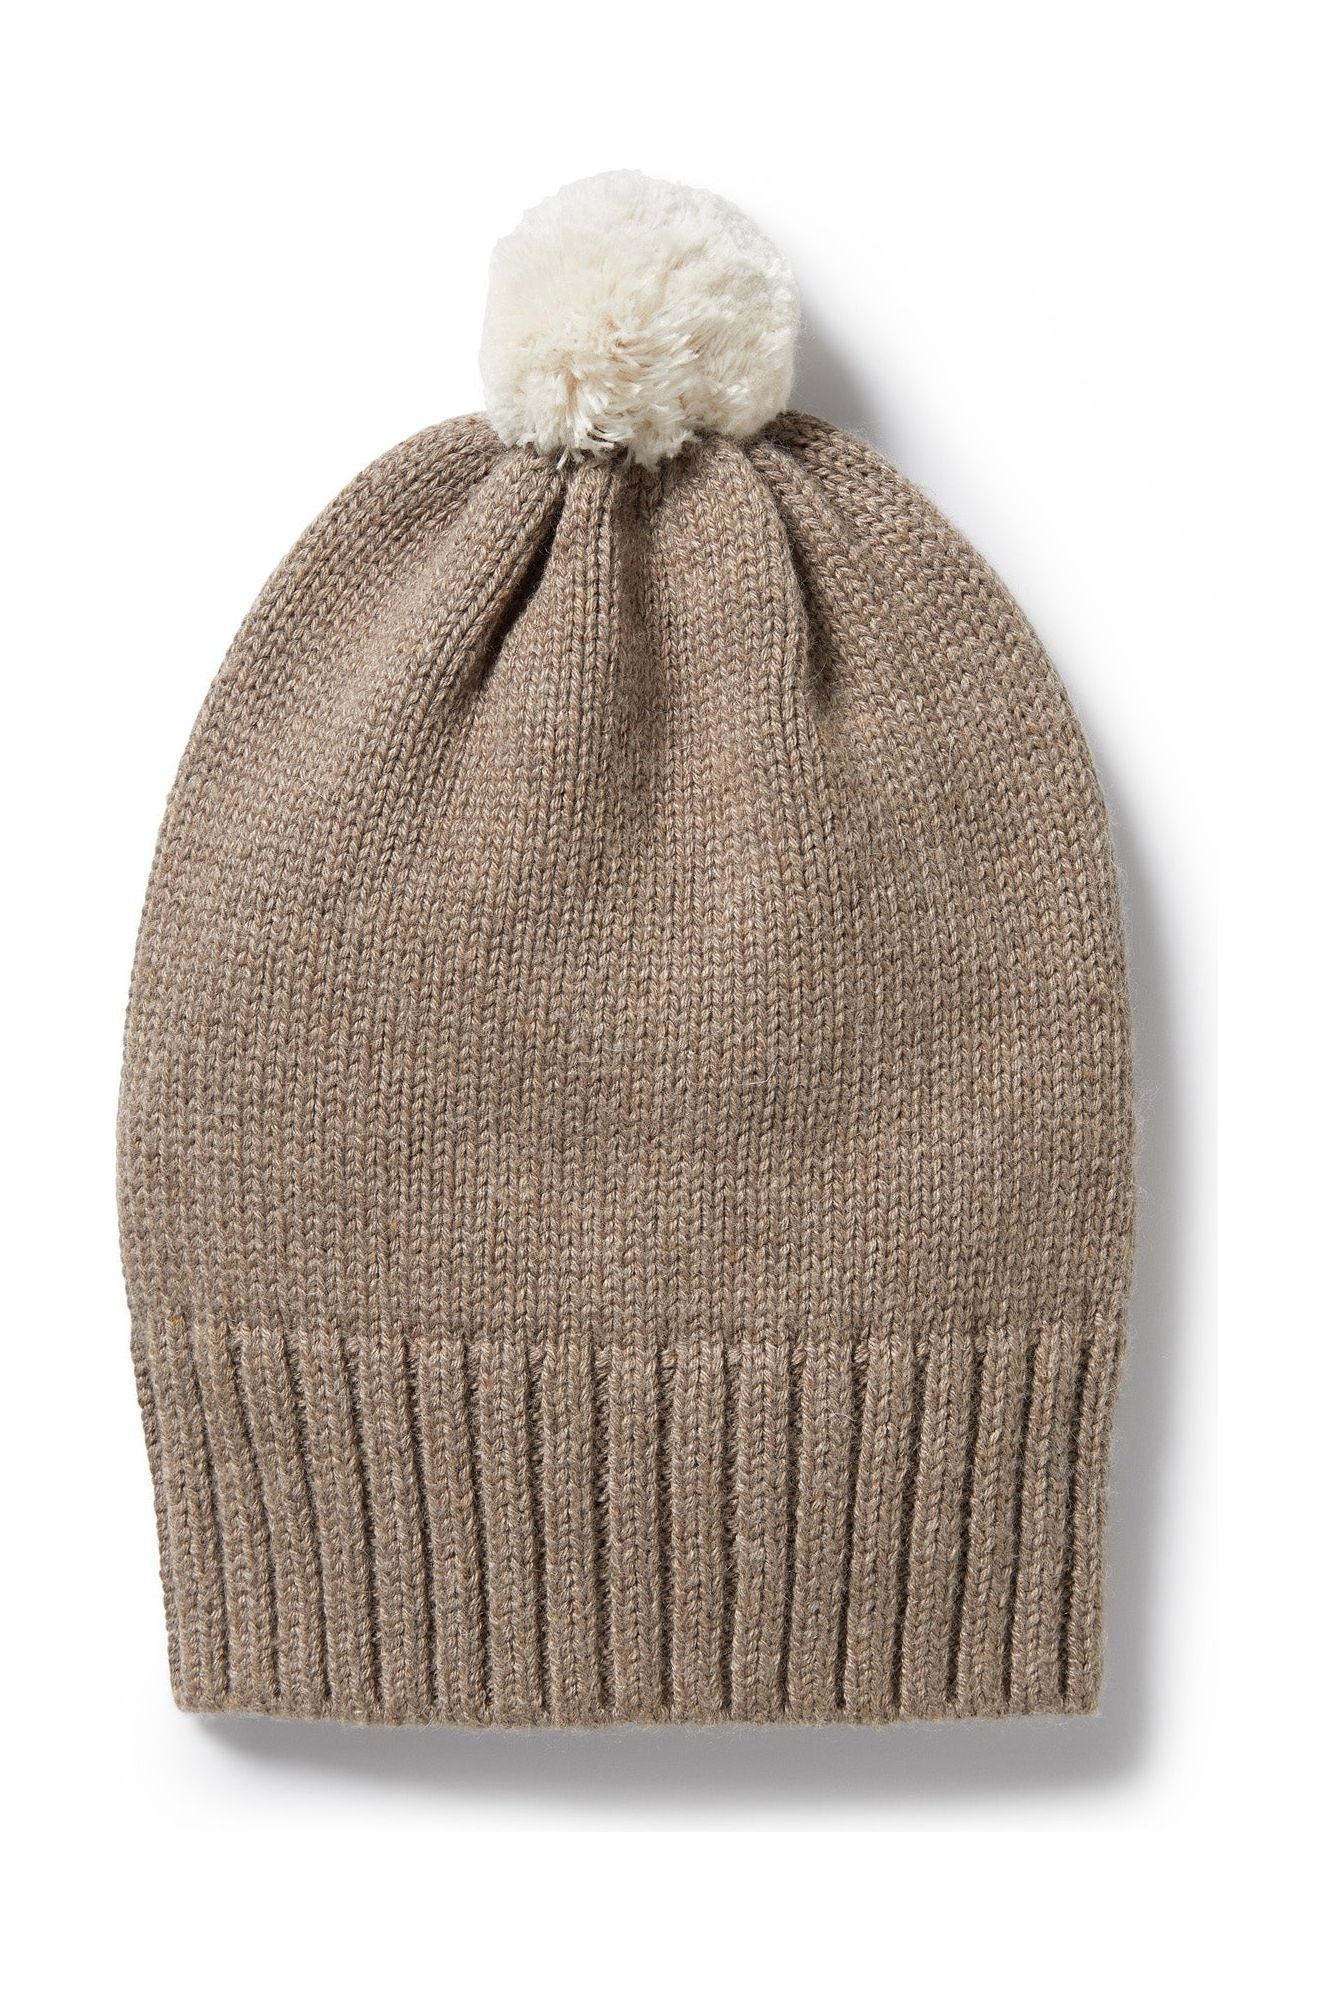 Walnut Knitted Hat